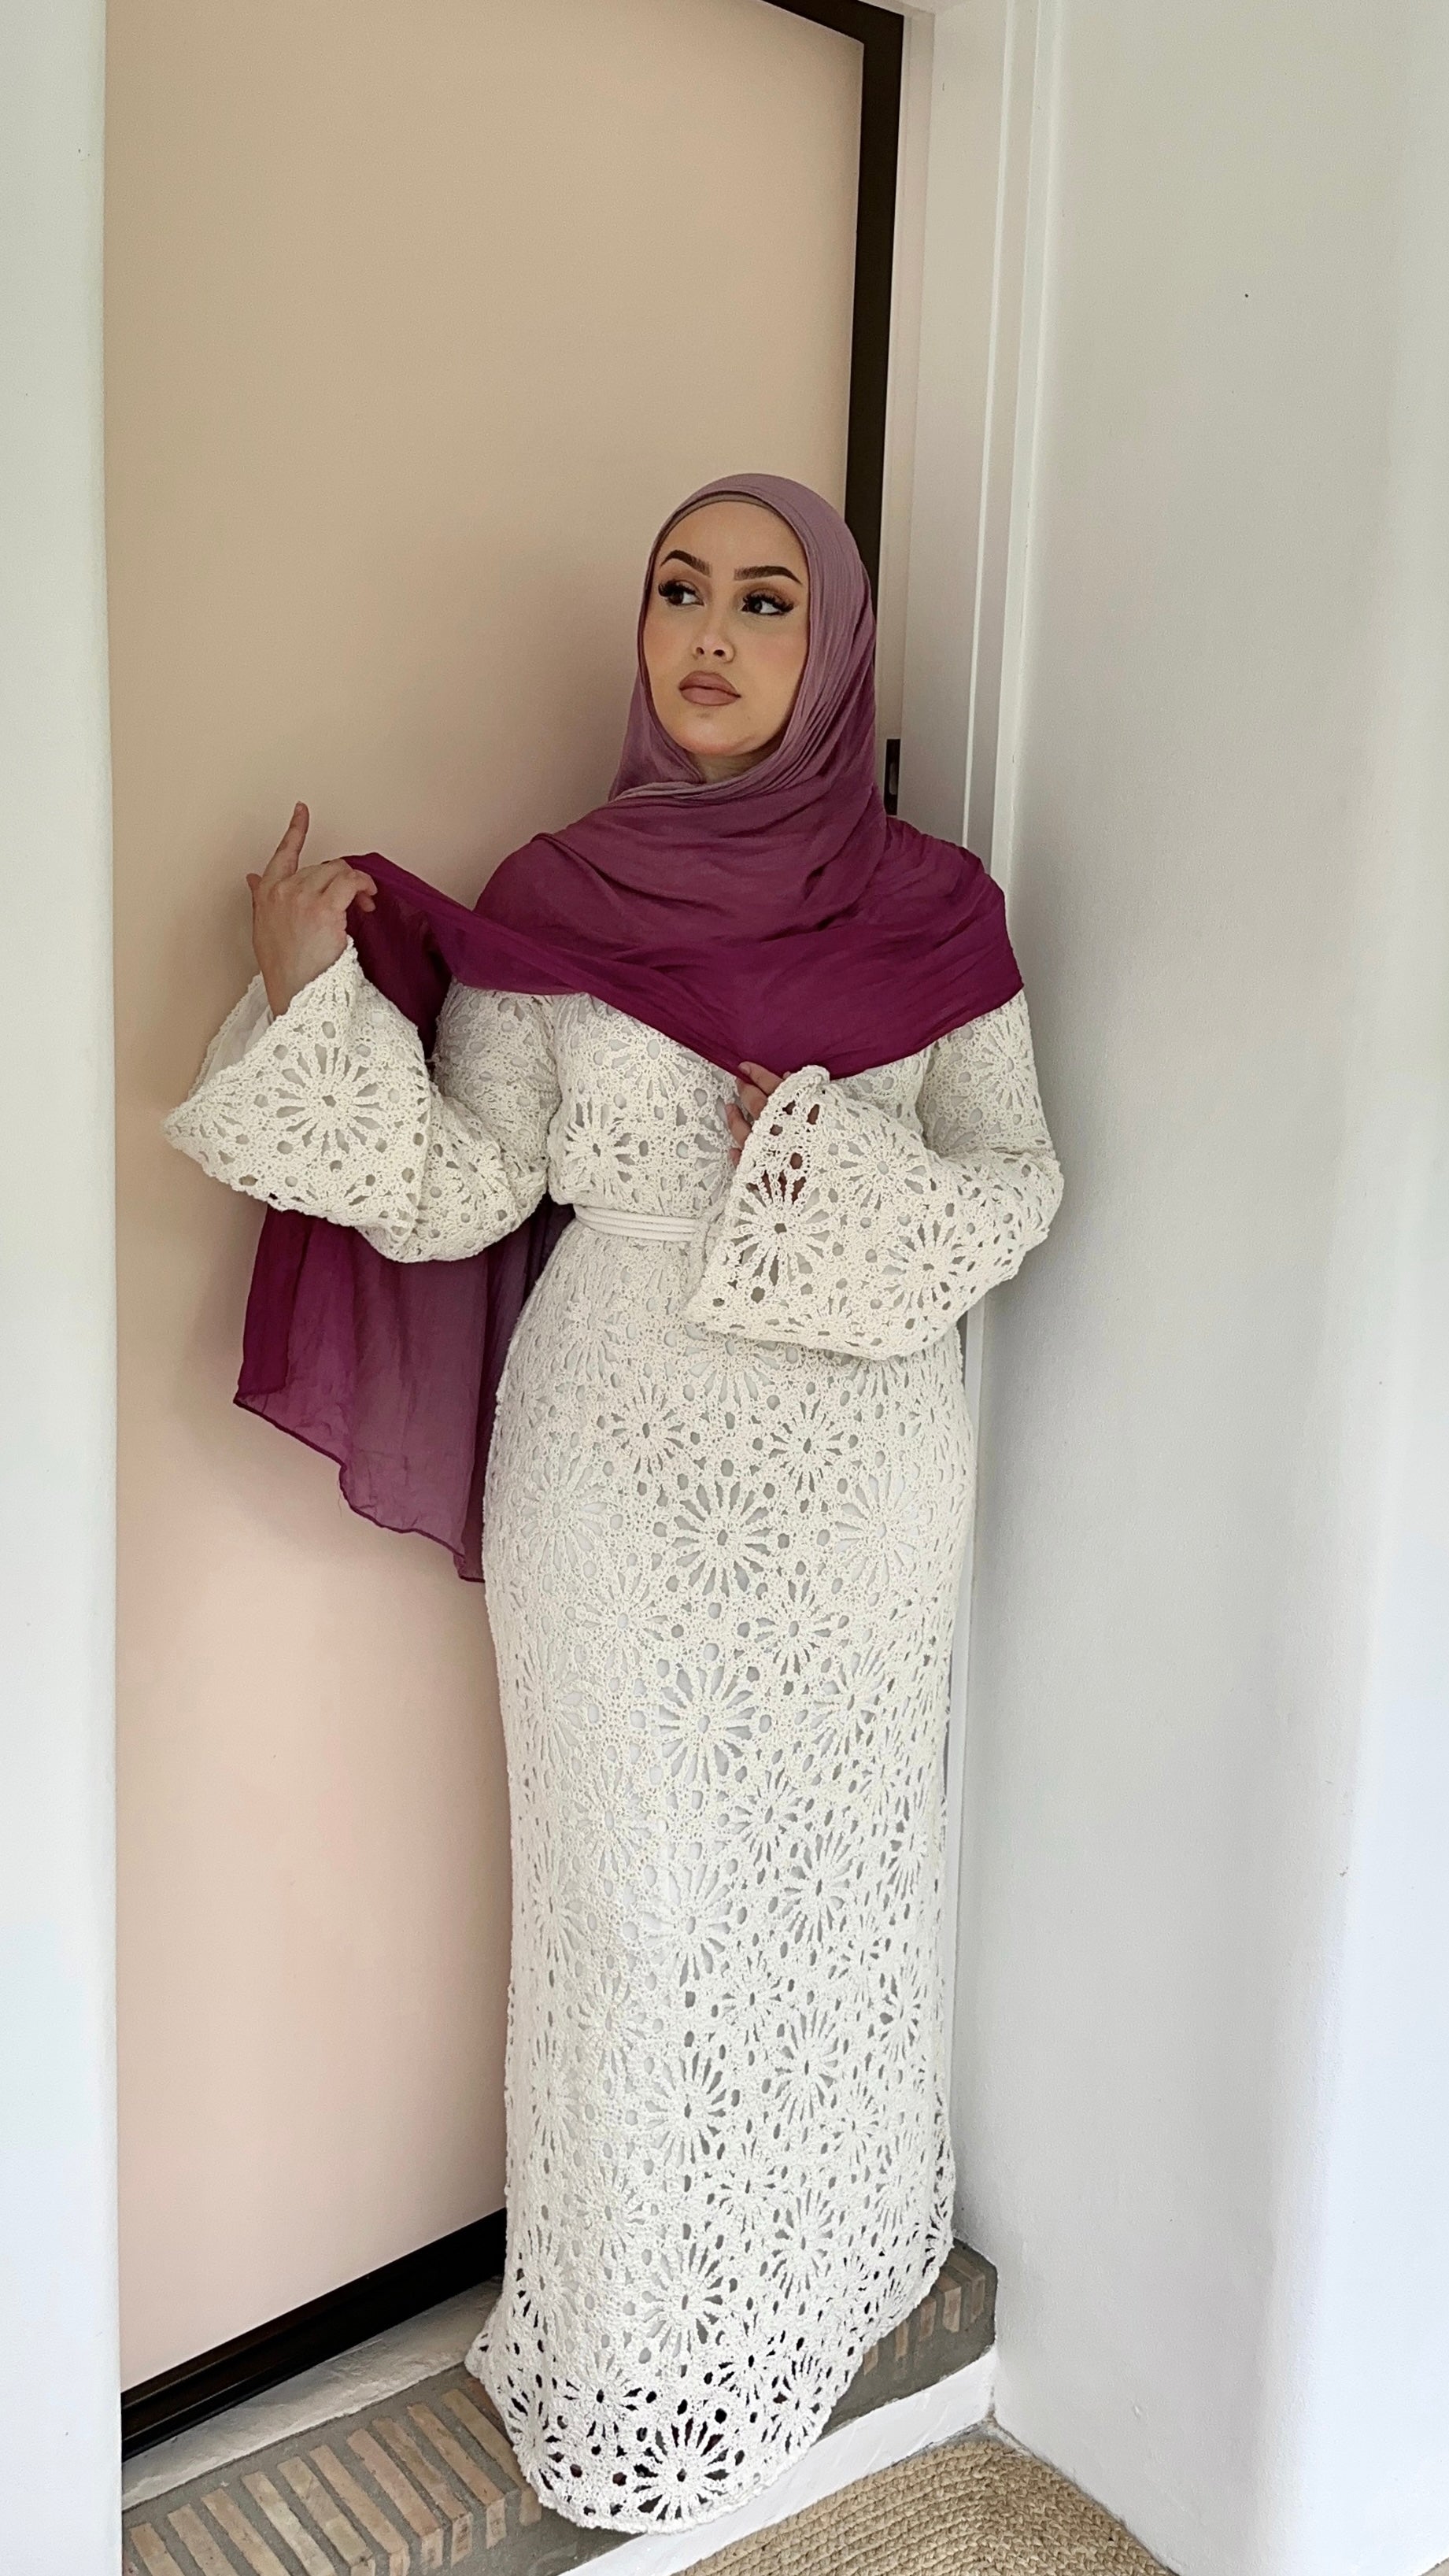 ‘MULBERRY’ (OMBRÉ) - Premium Modal Hijab